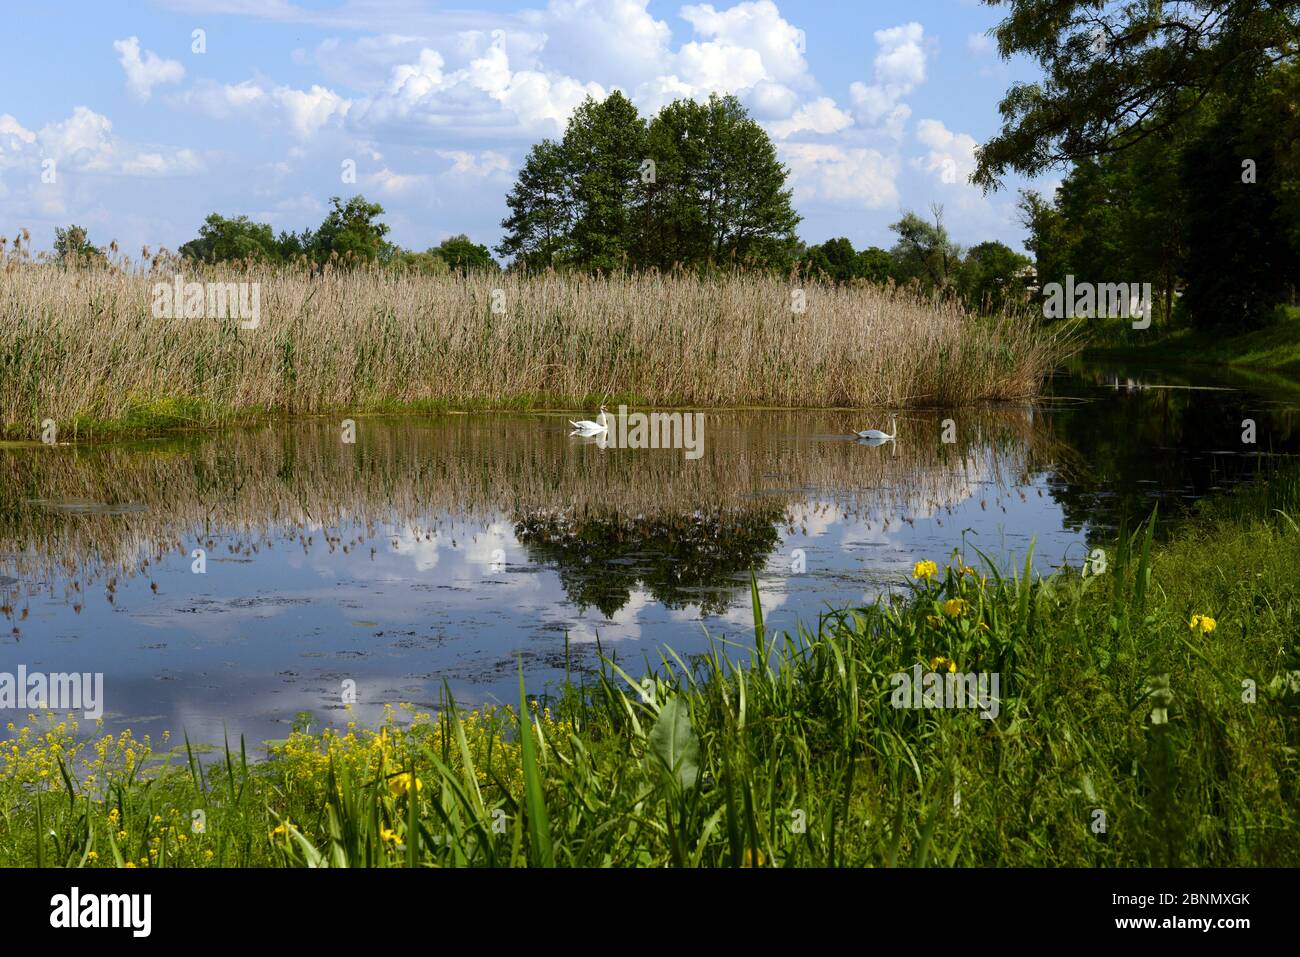 Oxbow Lake in the Bug River floodplain, Mute Swans (Cygnus olor) and Reedbed (Phragmites australis), Stare Okopy, Poland. Stock Photo